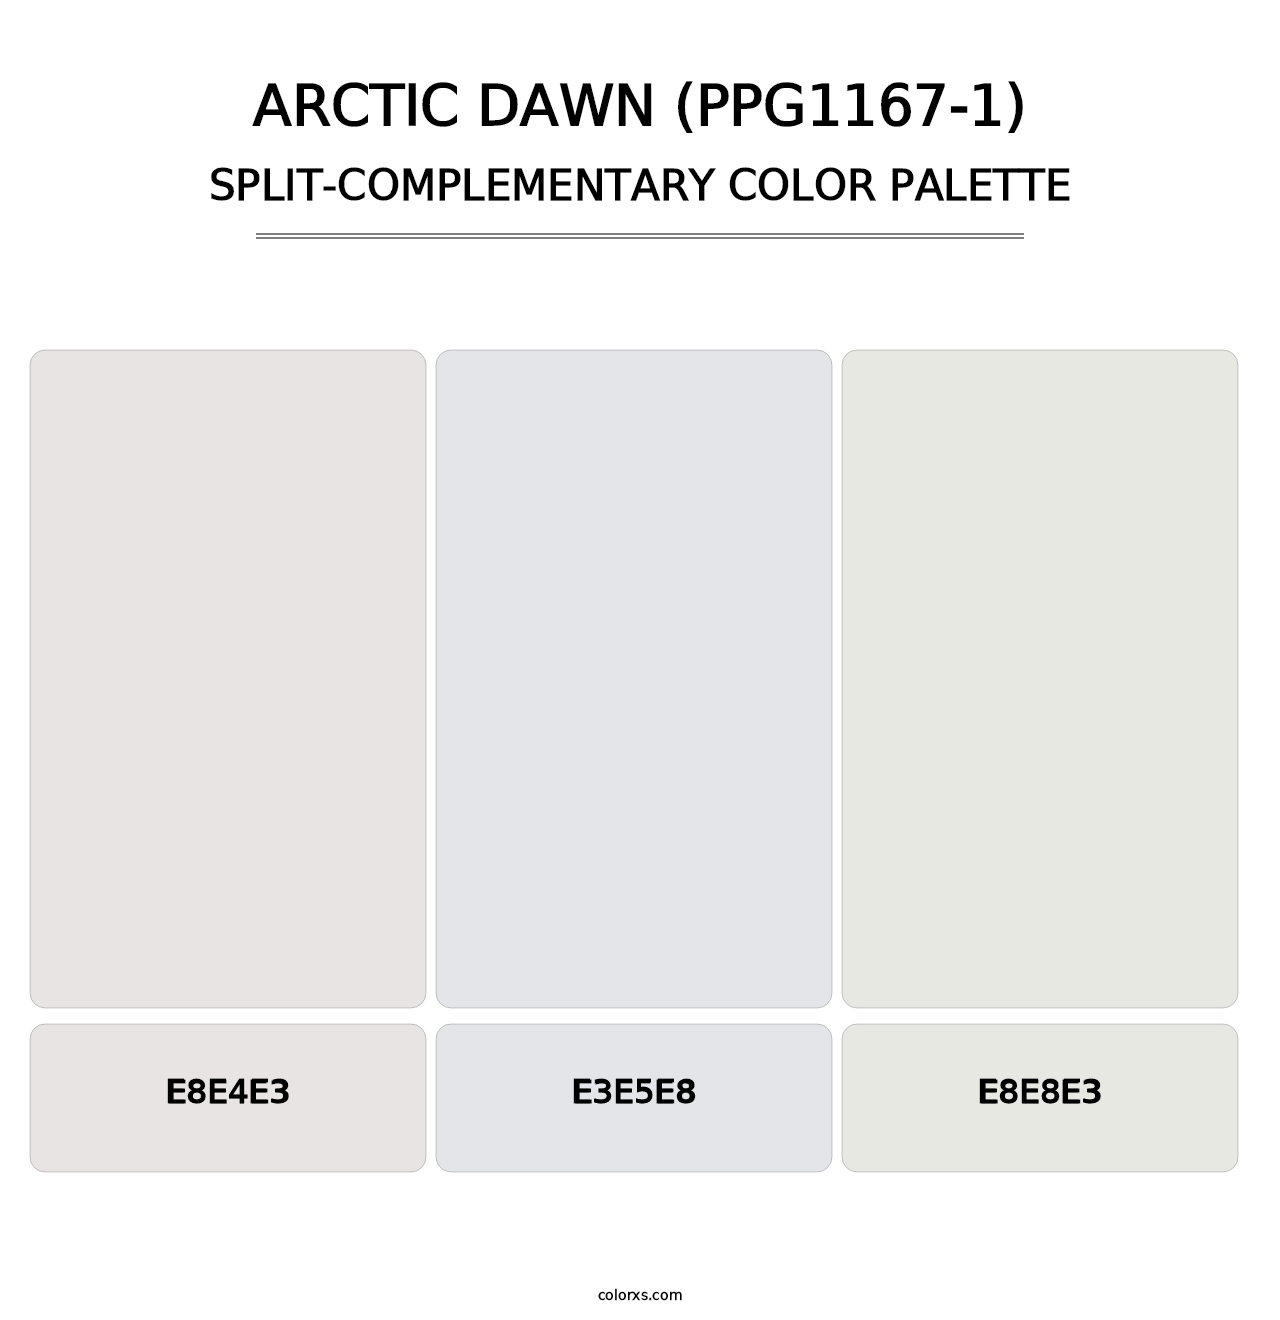 Arctic Dawn (PPG1167-1) - Split-Complementary Color Palette